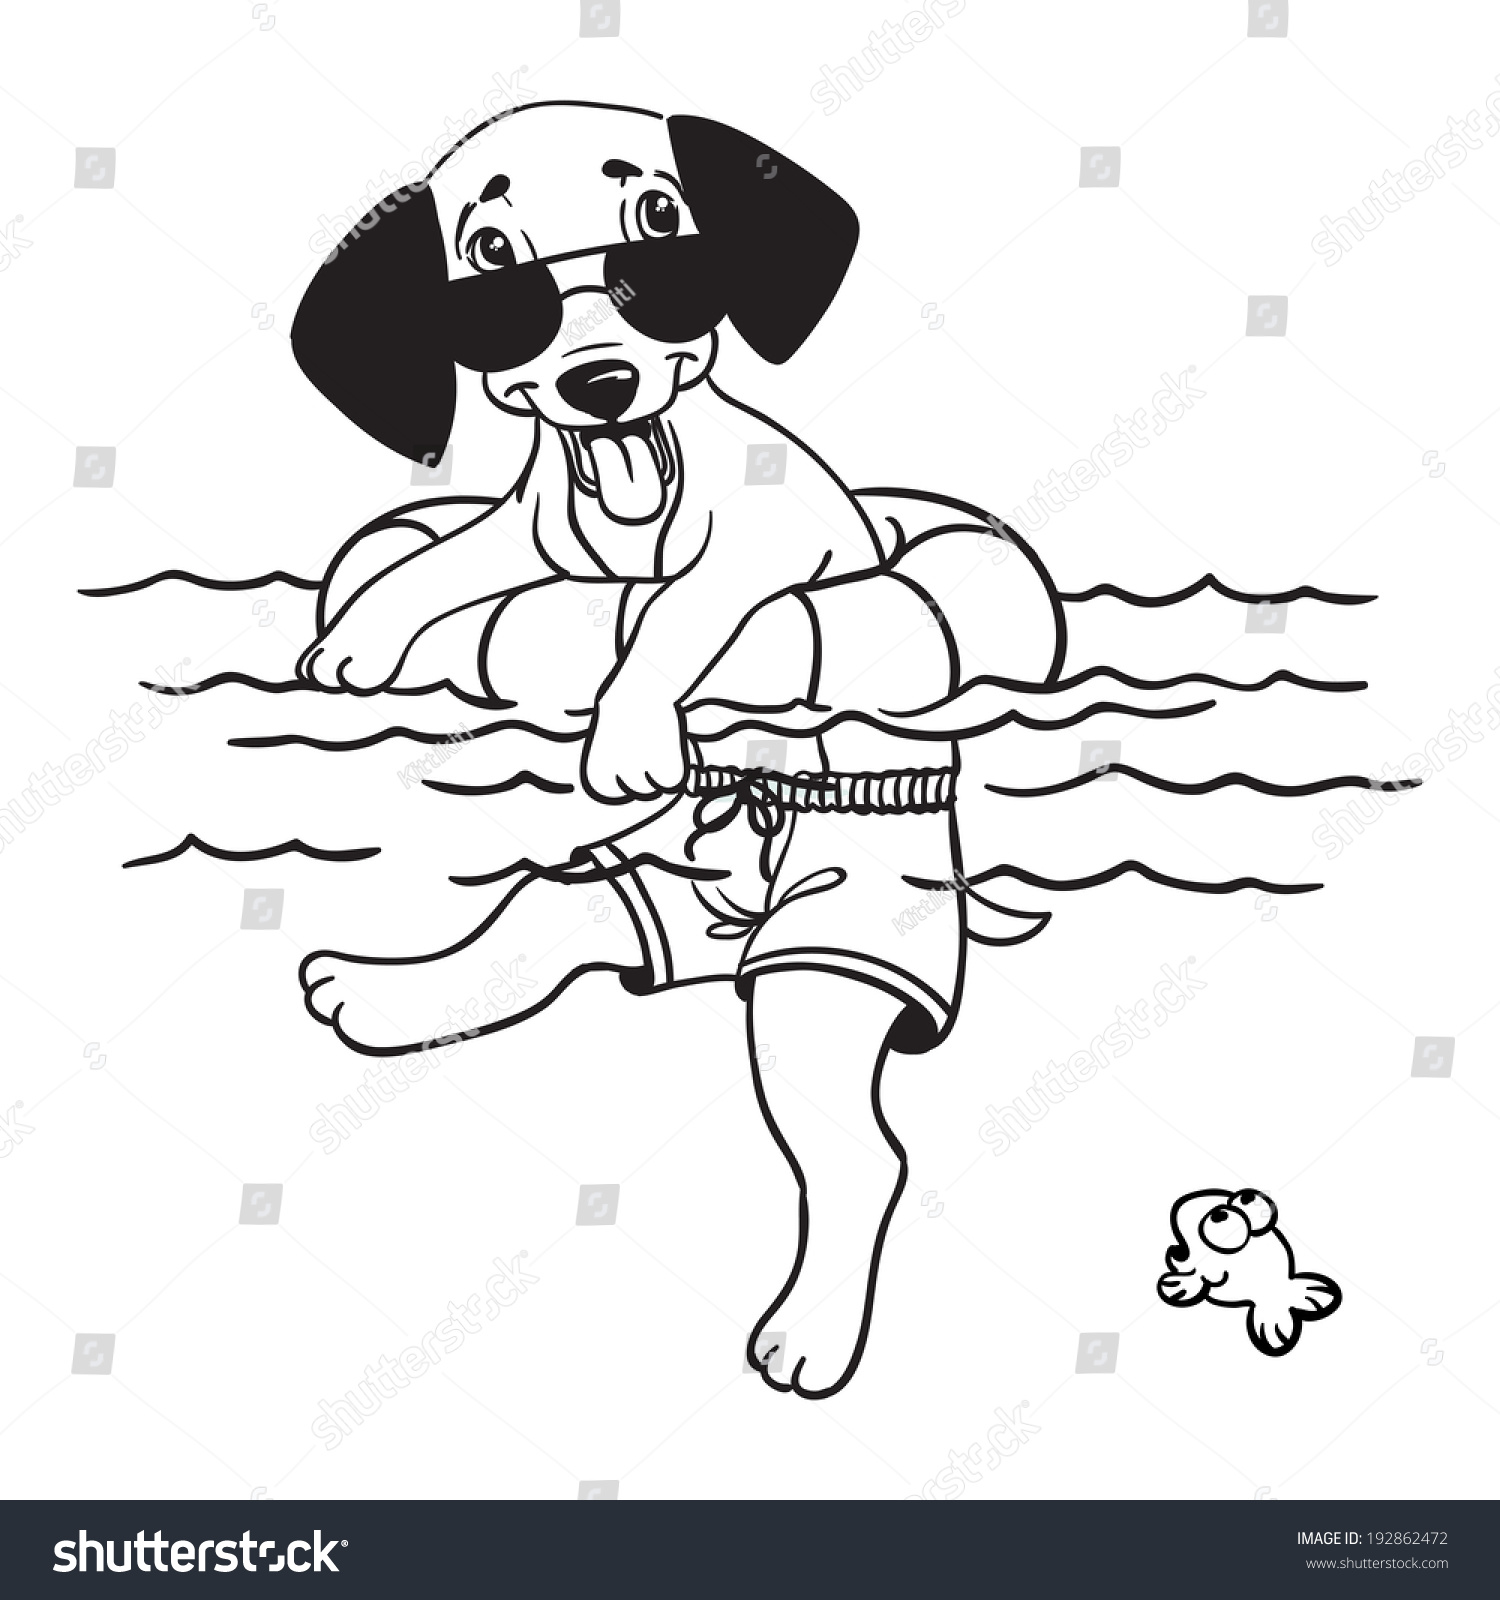 clipart dog swimming - photo #4